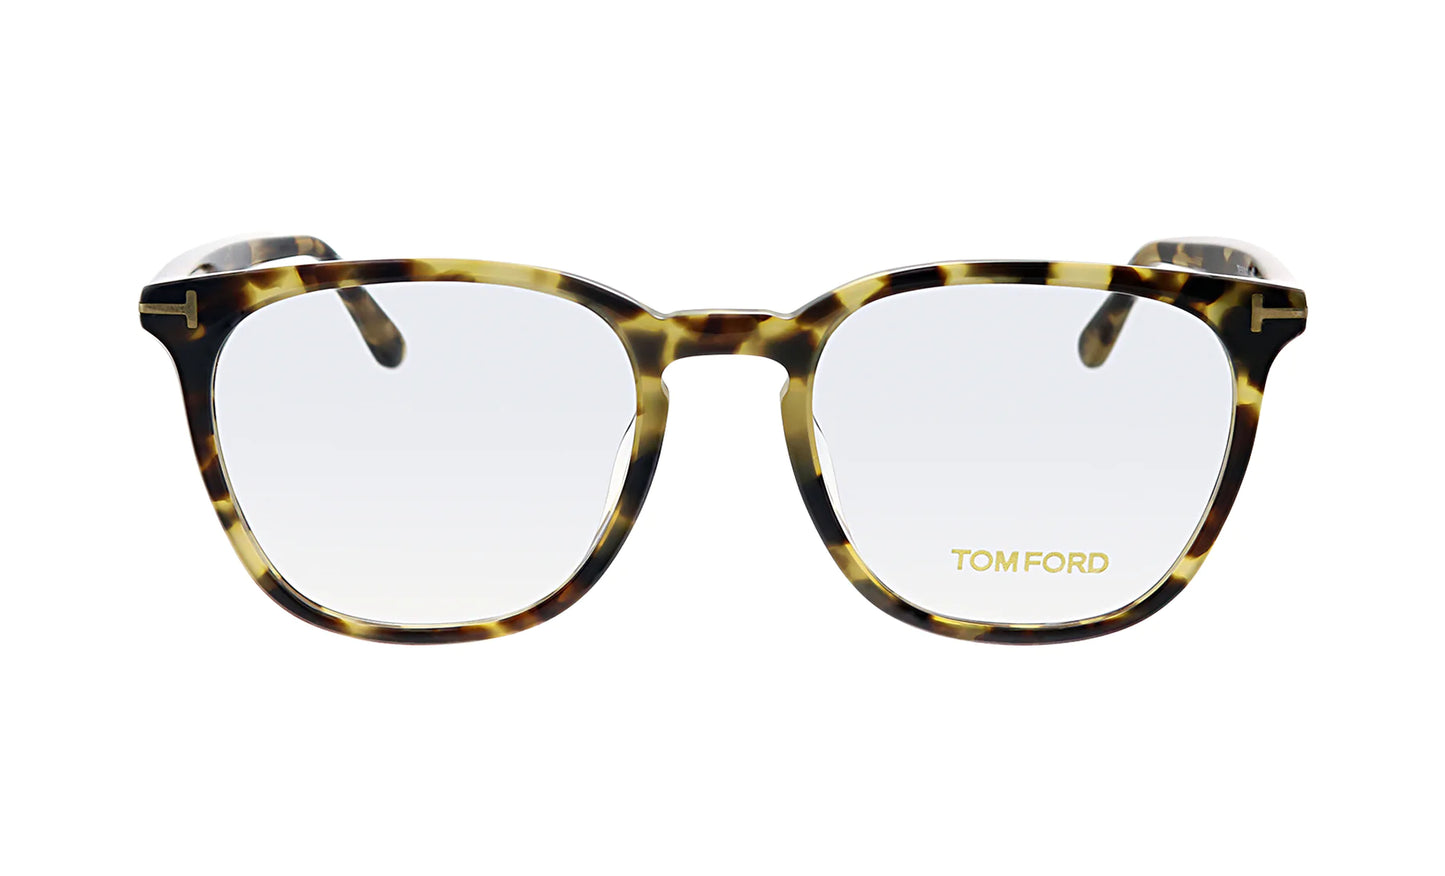 Tom Ford TF 5506-F 055